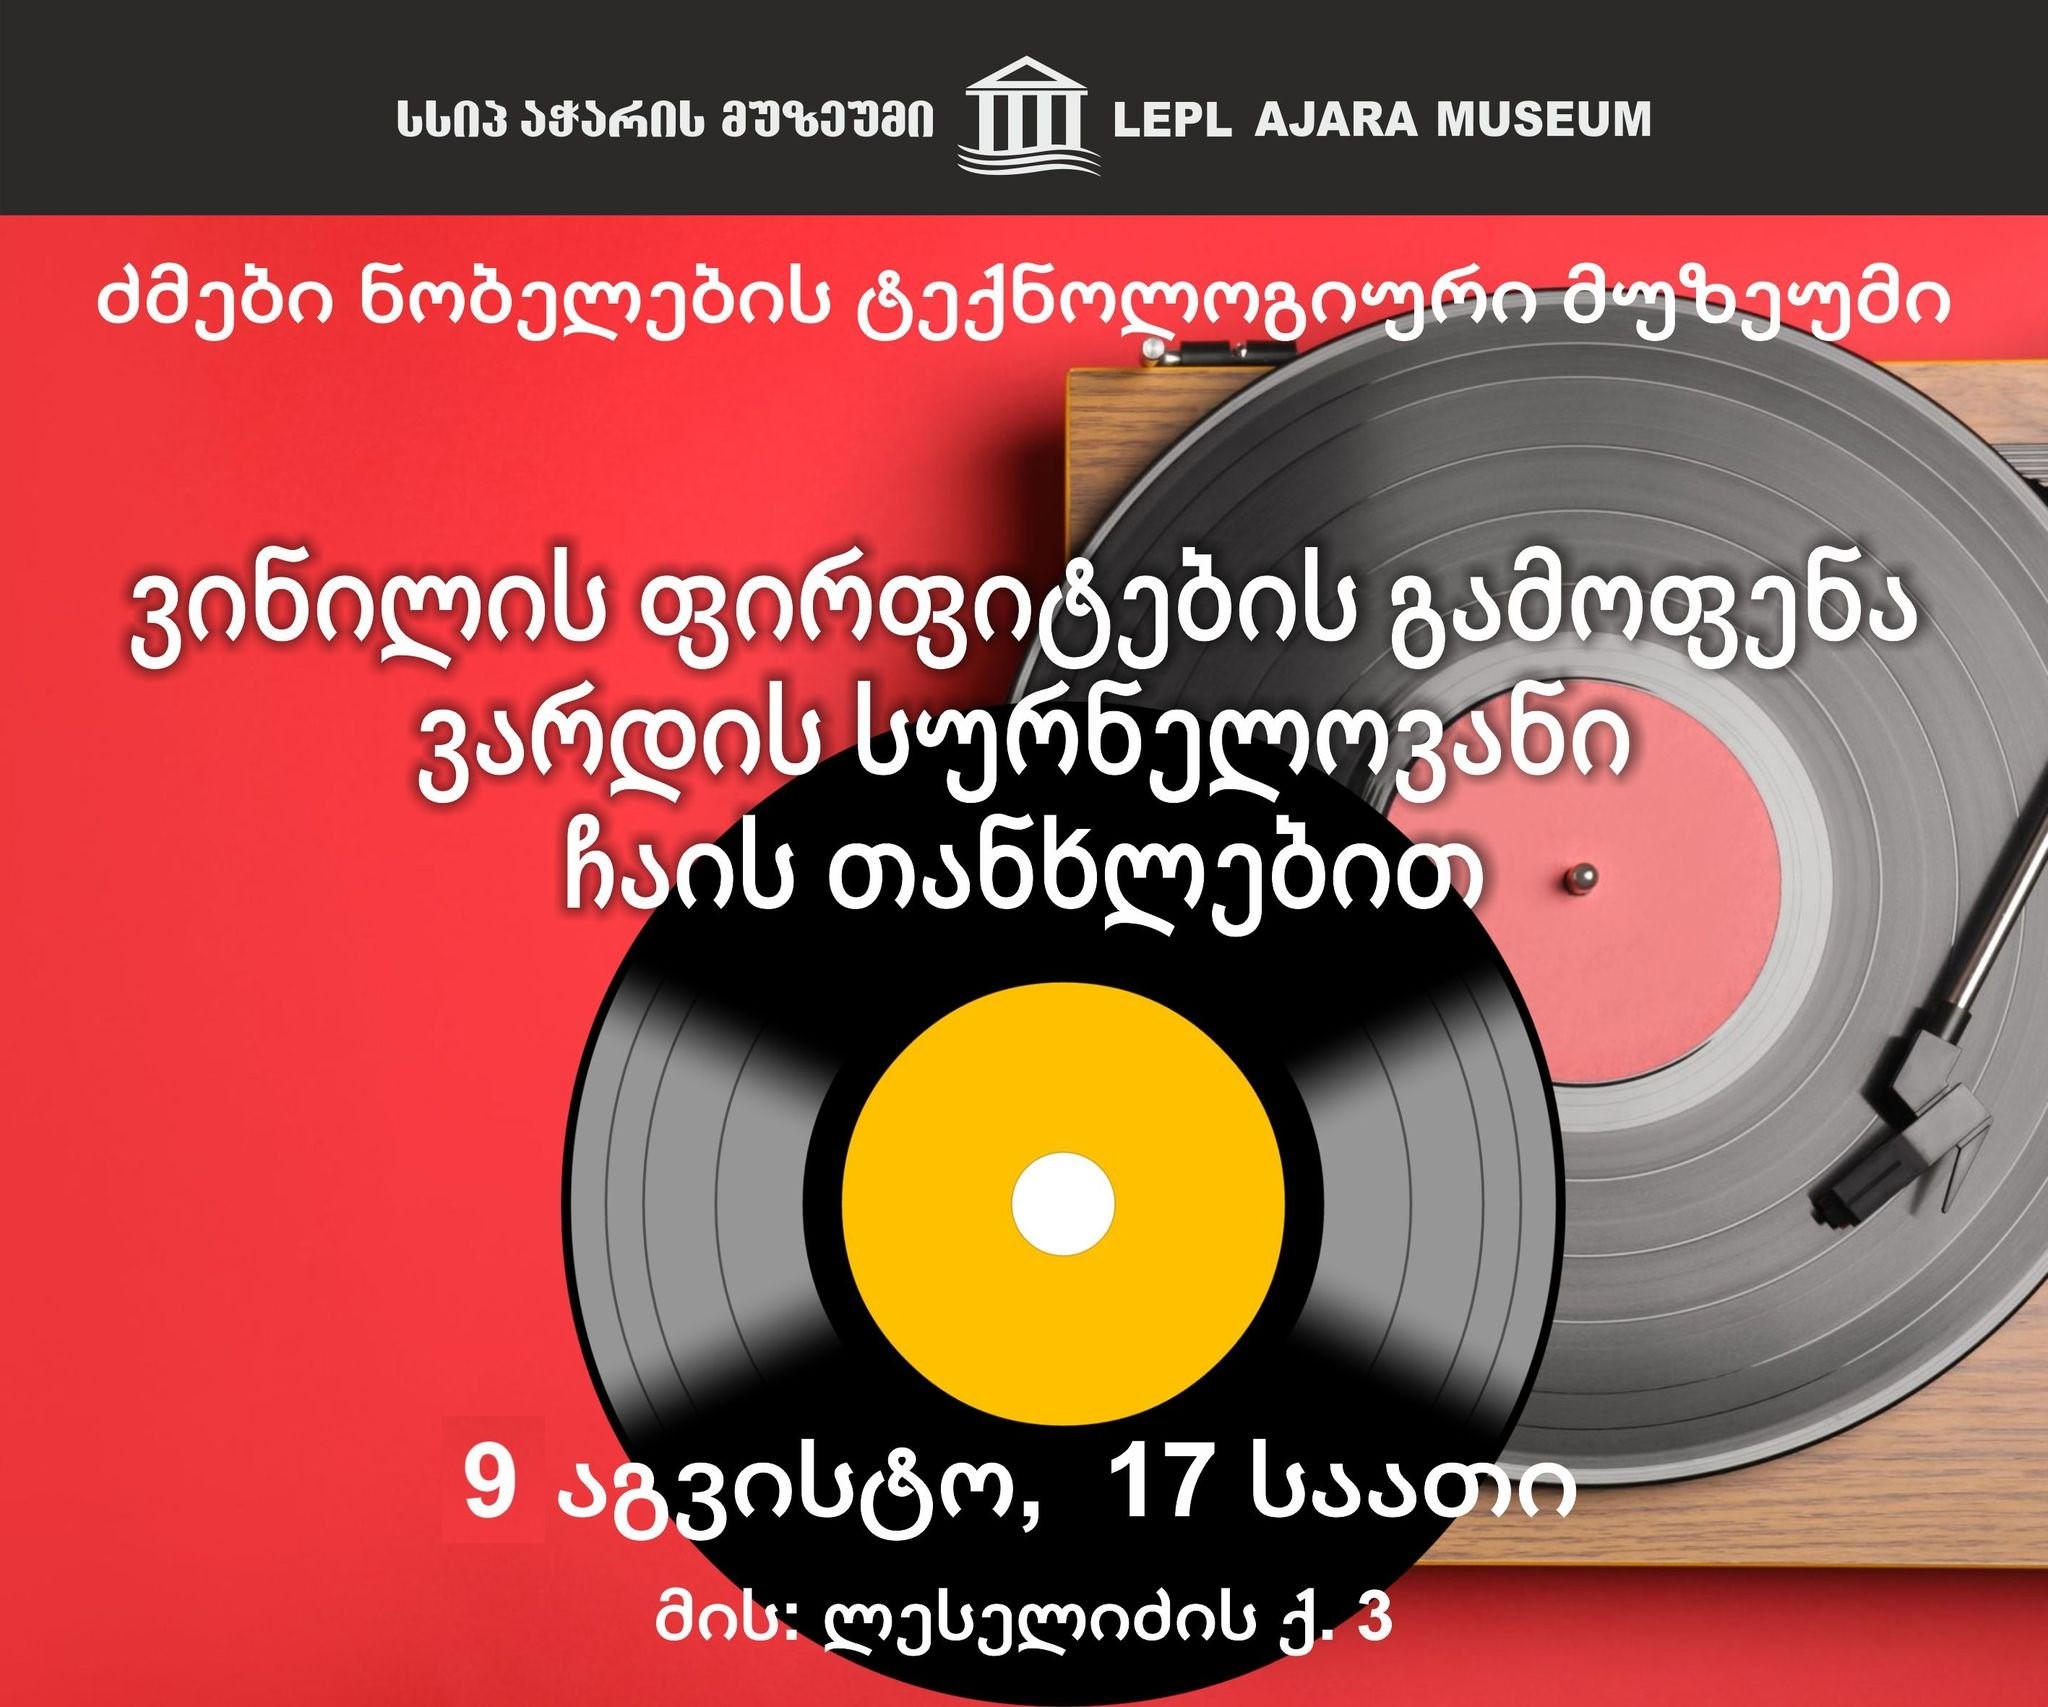 exhibition of vinyl records.